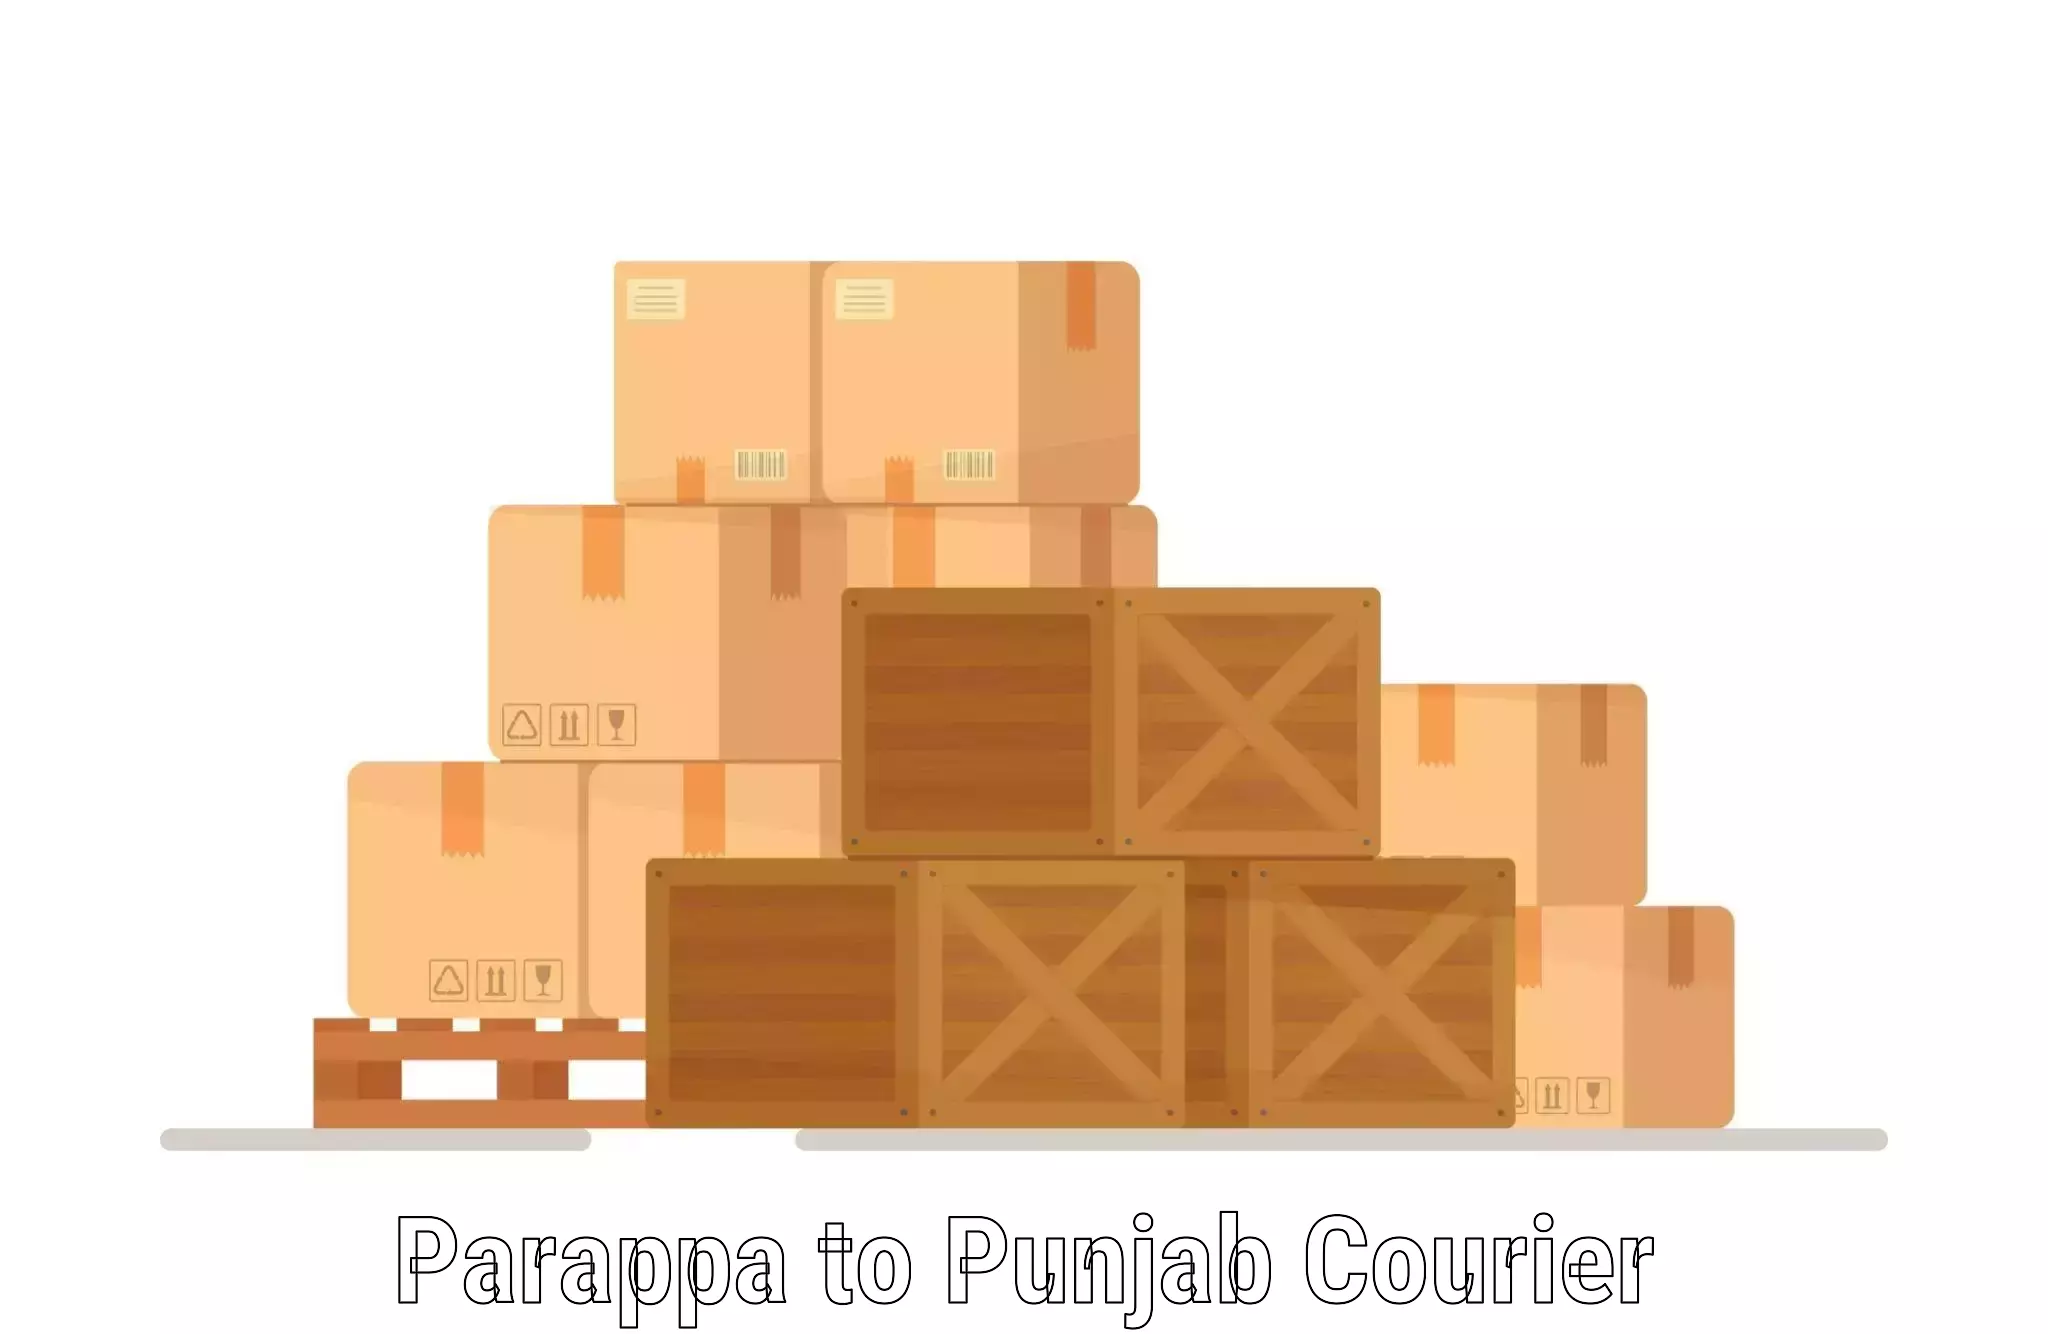 International courier networks Parappa to Kotkapura